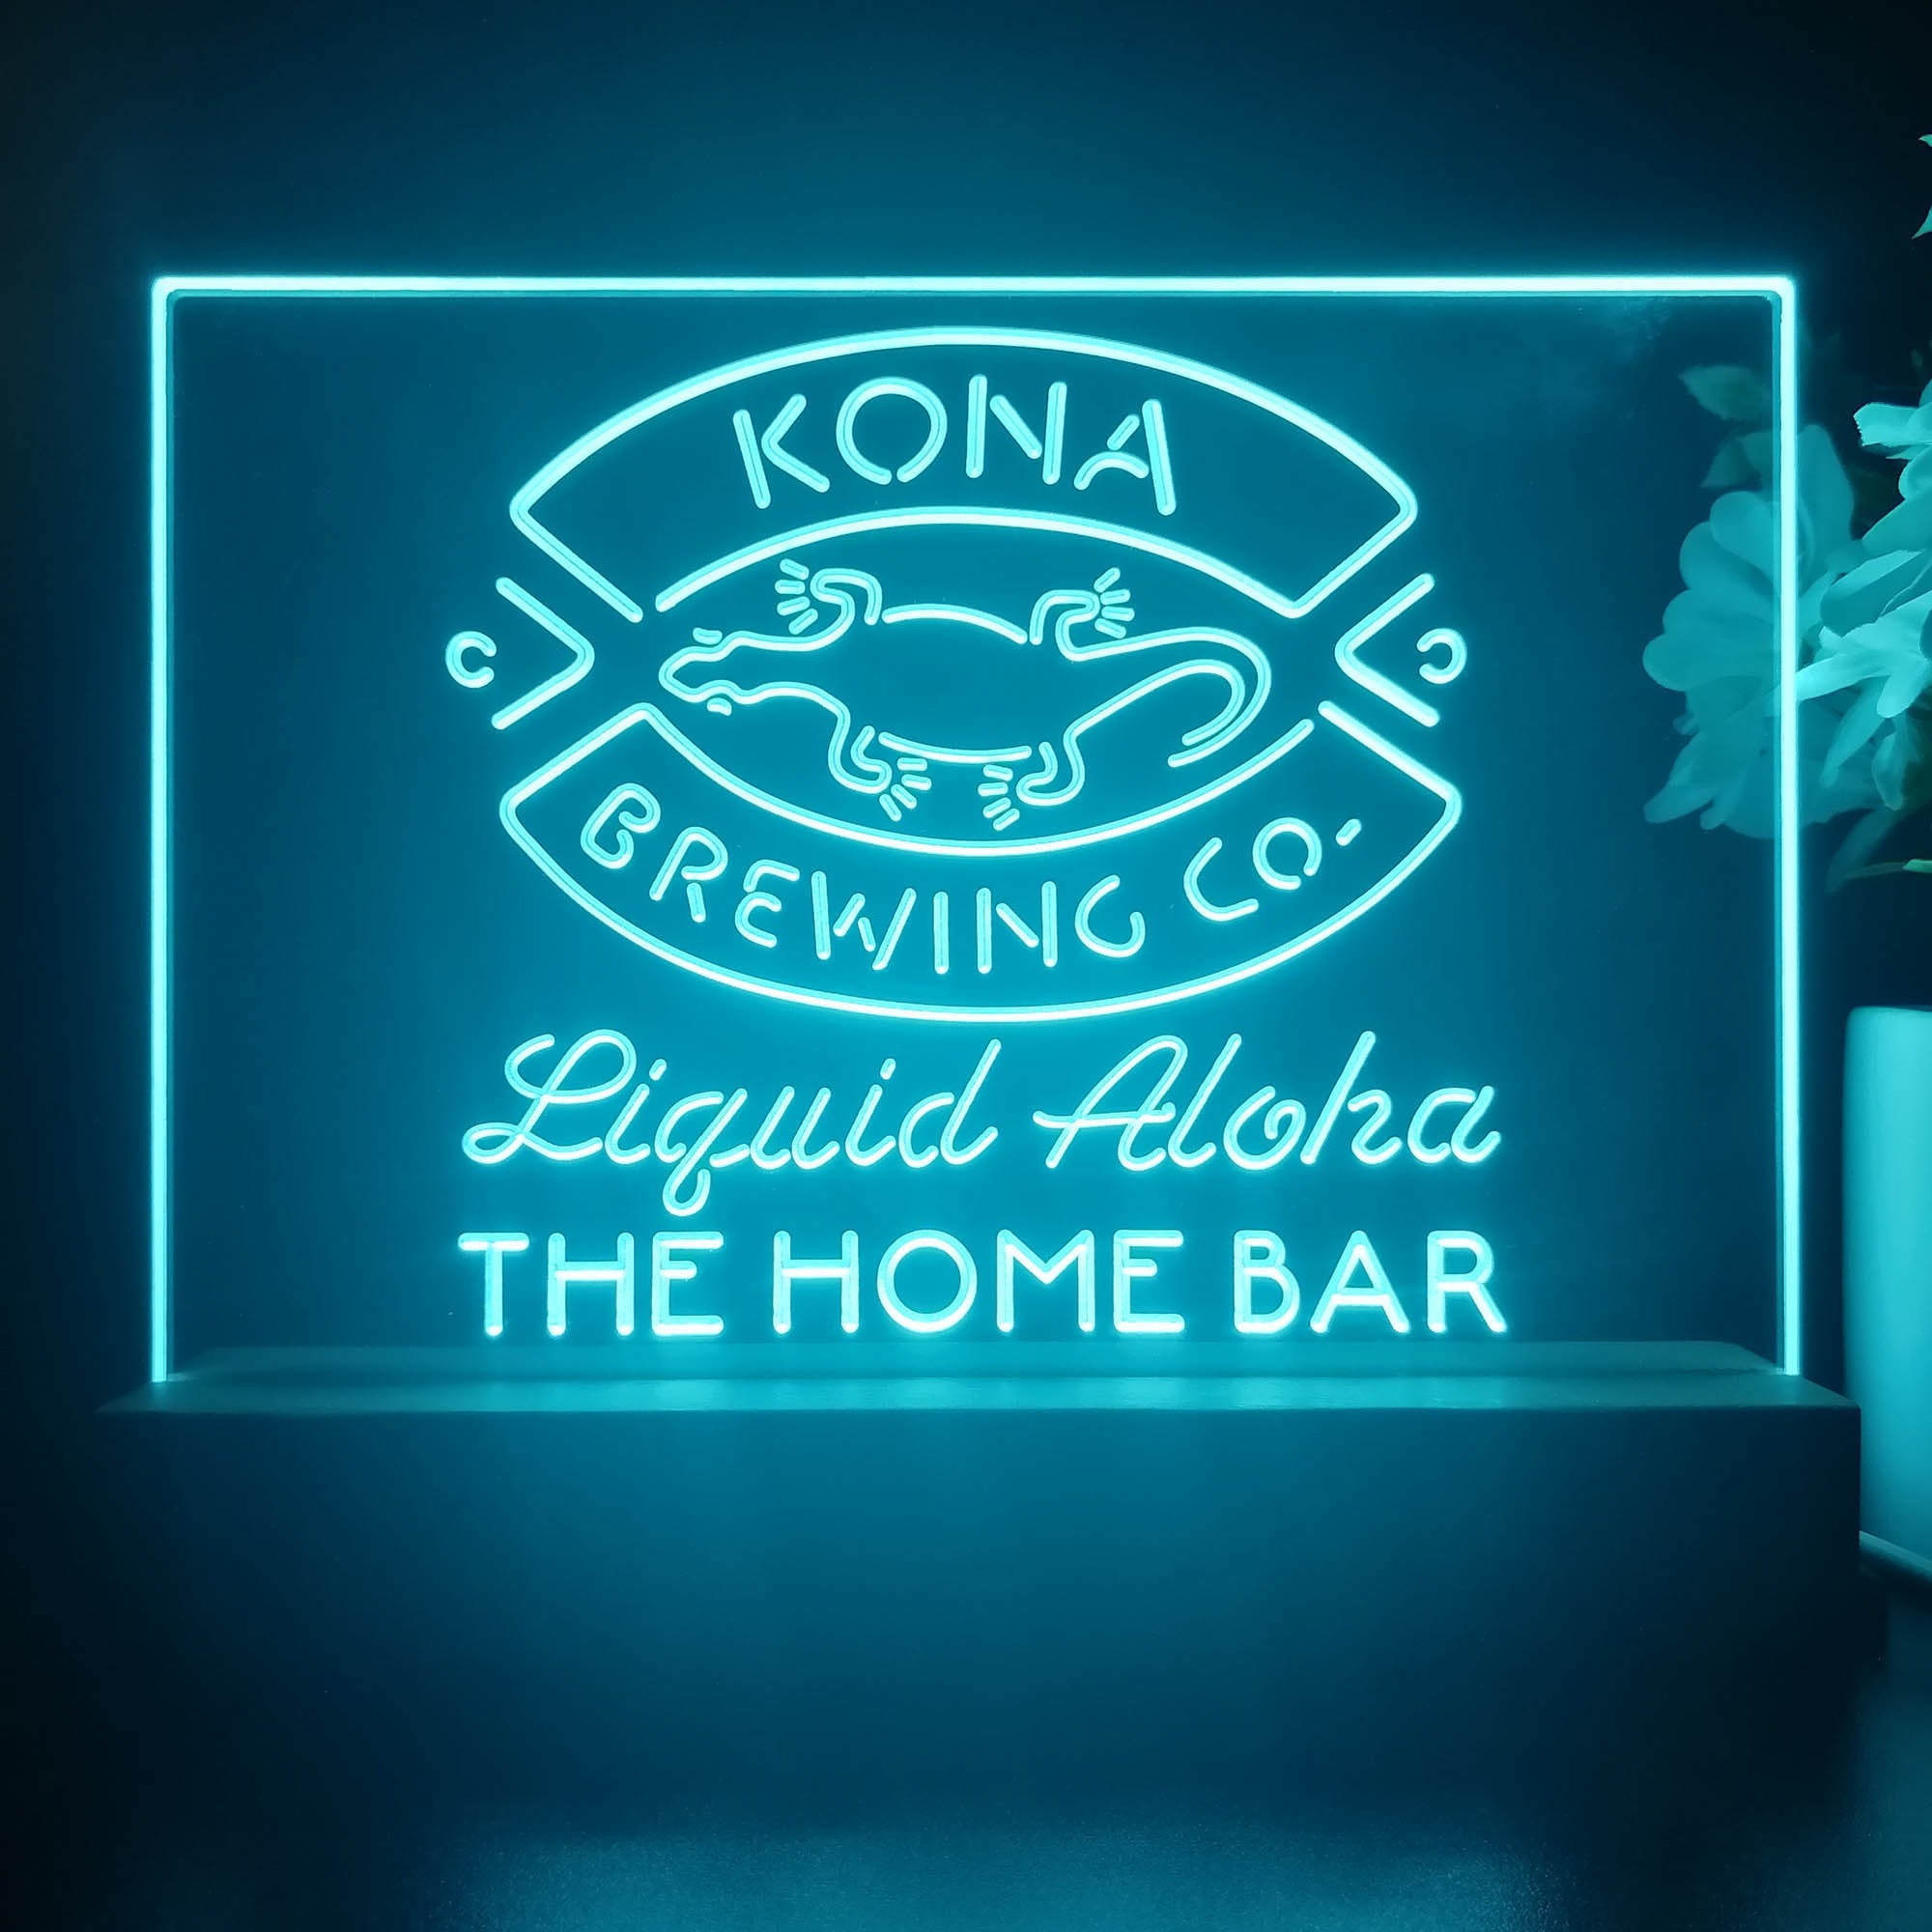 Personalized Kona Brewing Company Souvenir Neon LED Night Light Sign